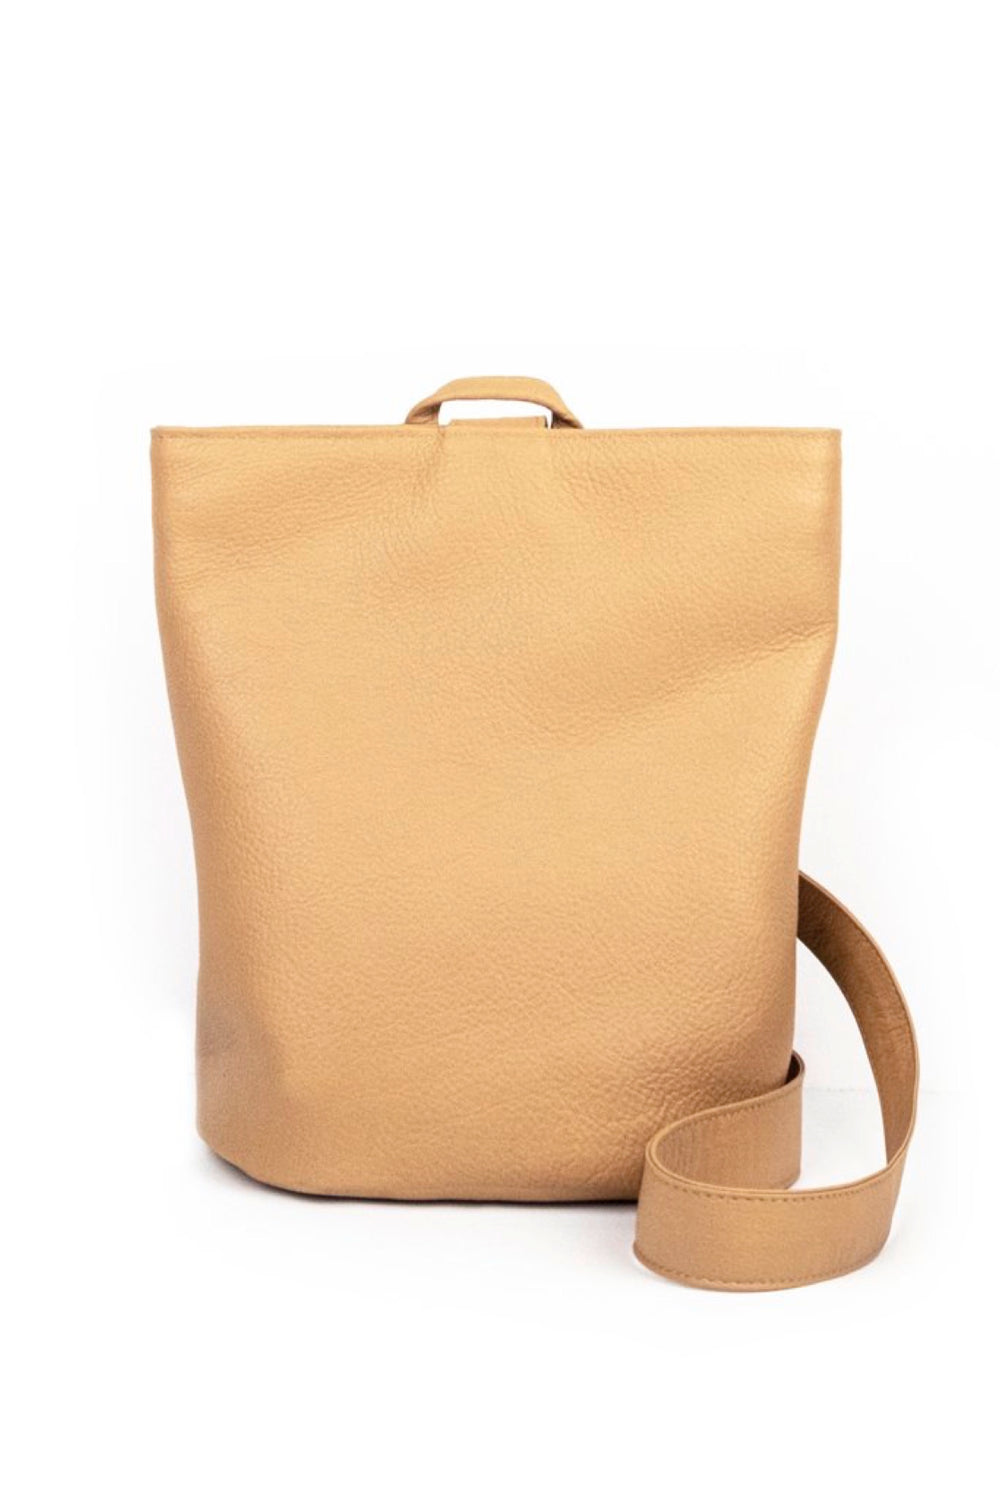 Tan Leather Sling Bag